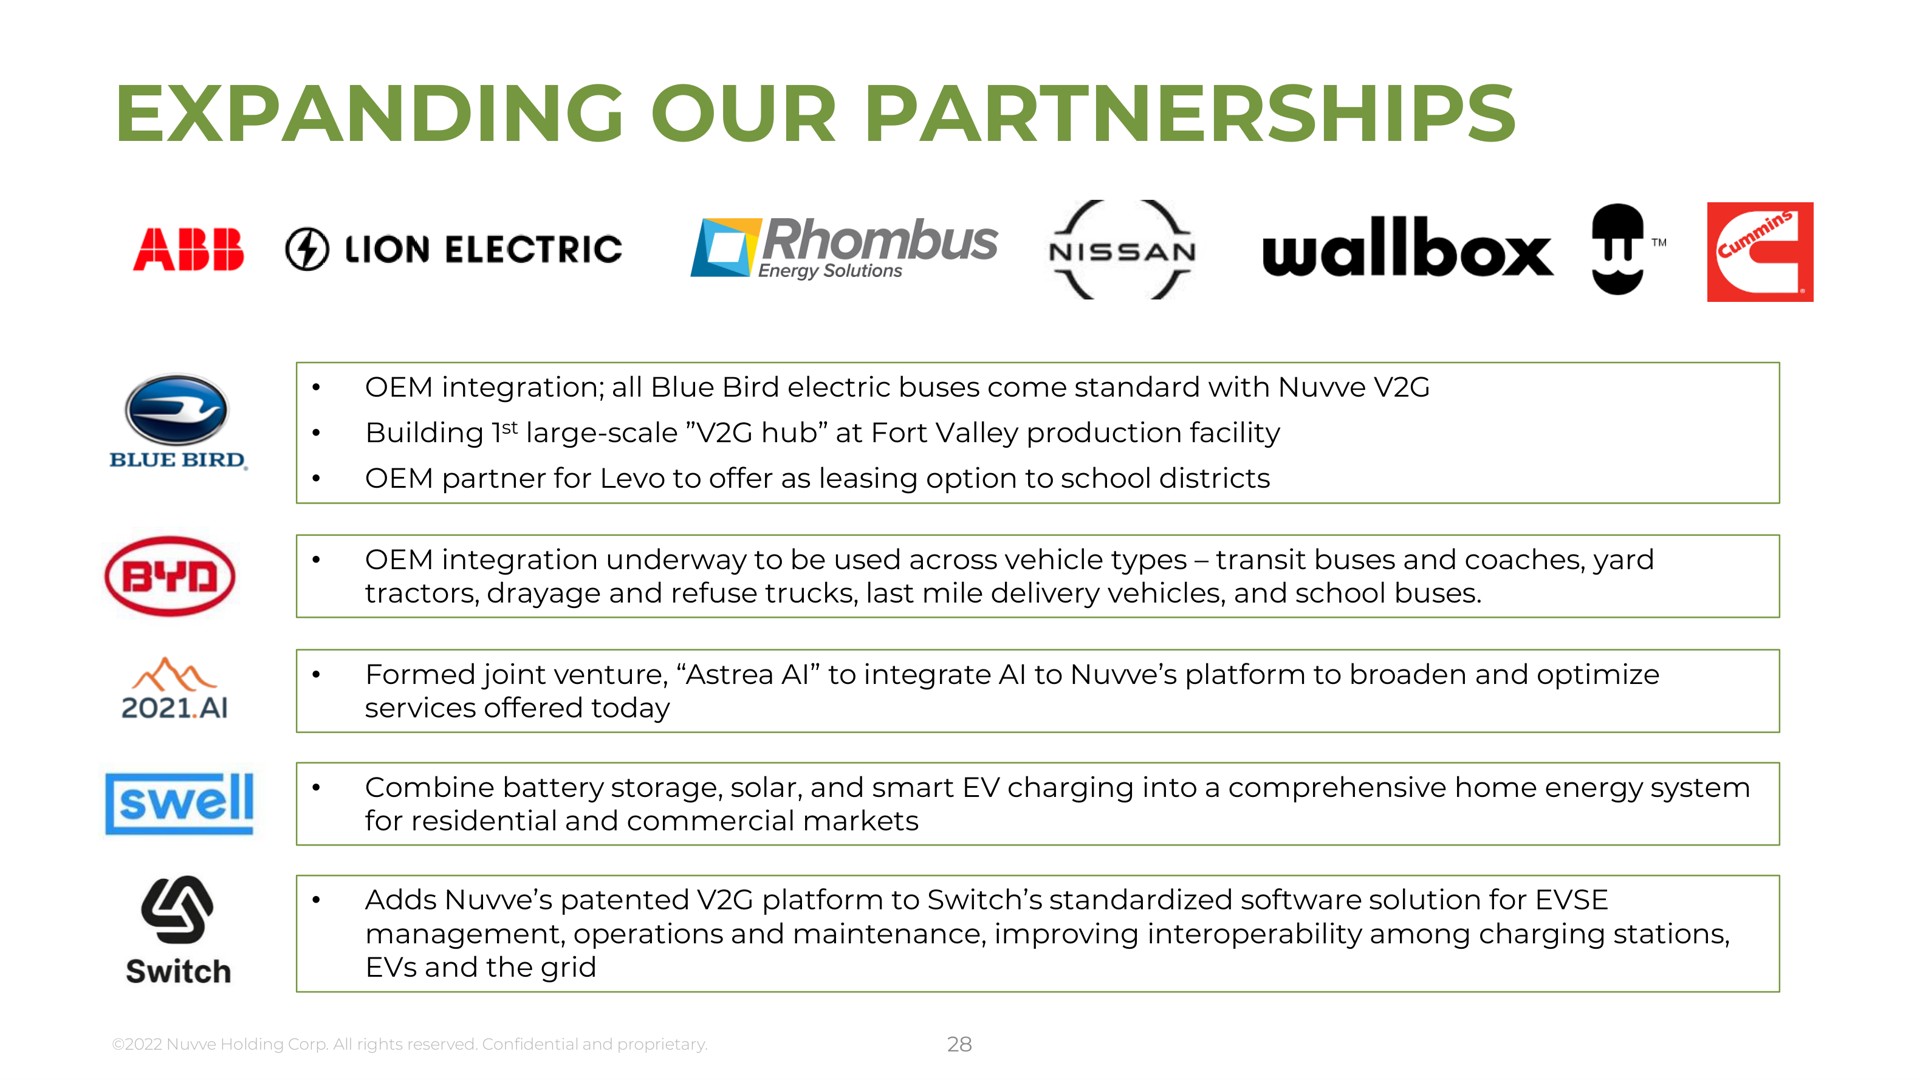 expanding our partnerships abb rhombus siren | Nuvve